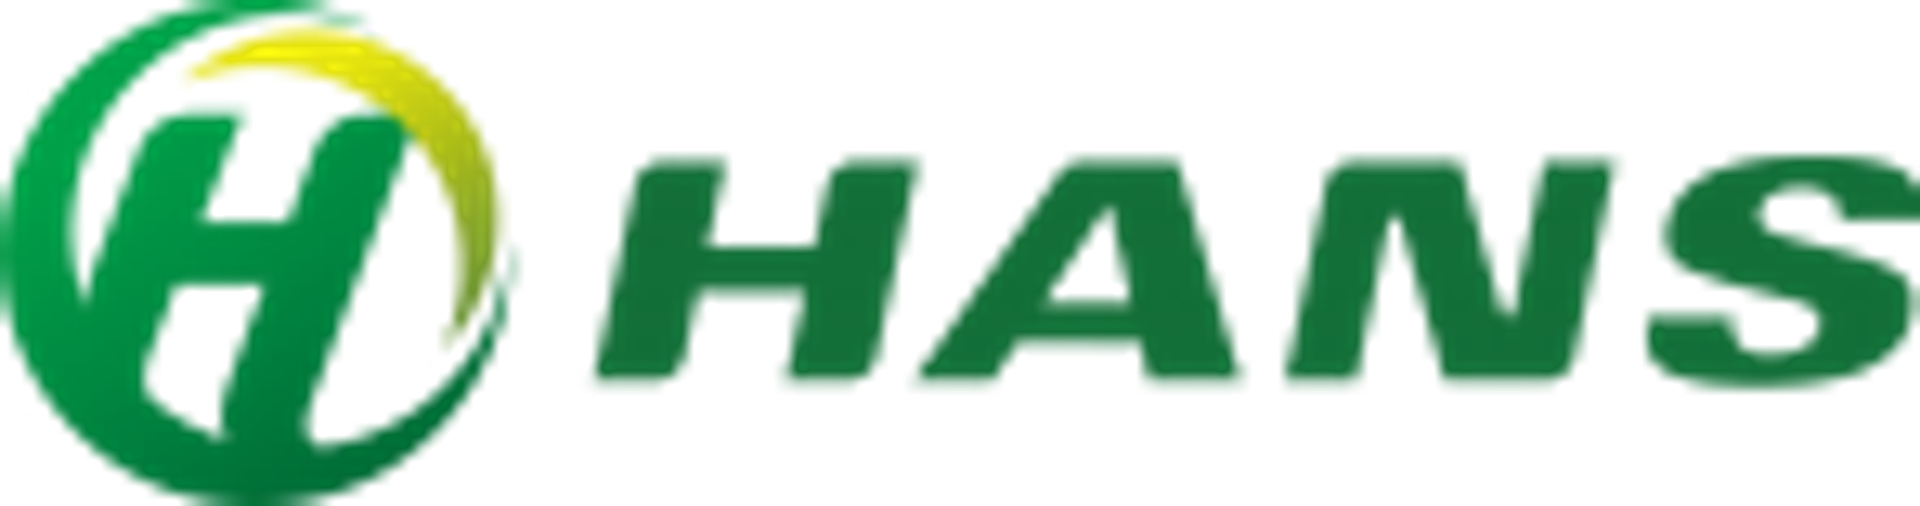 Hans Corporation Limited